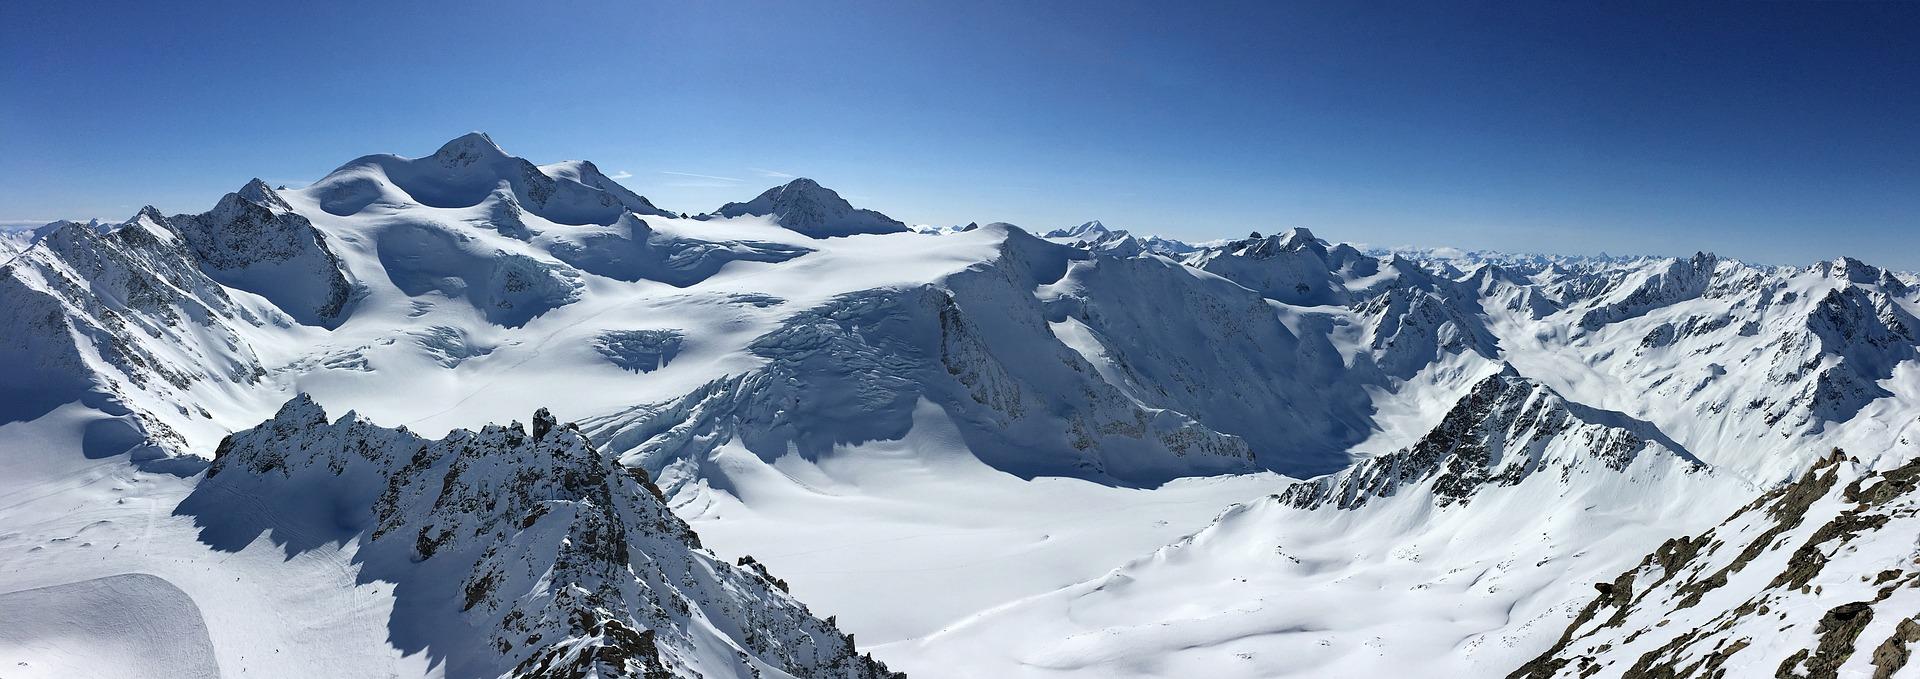 A picture of a snowy mountain range where Svante likes to ski